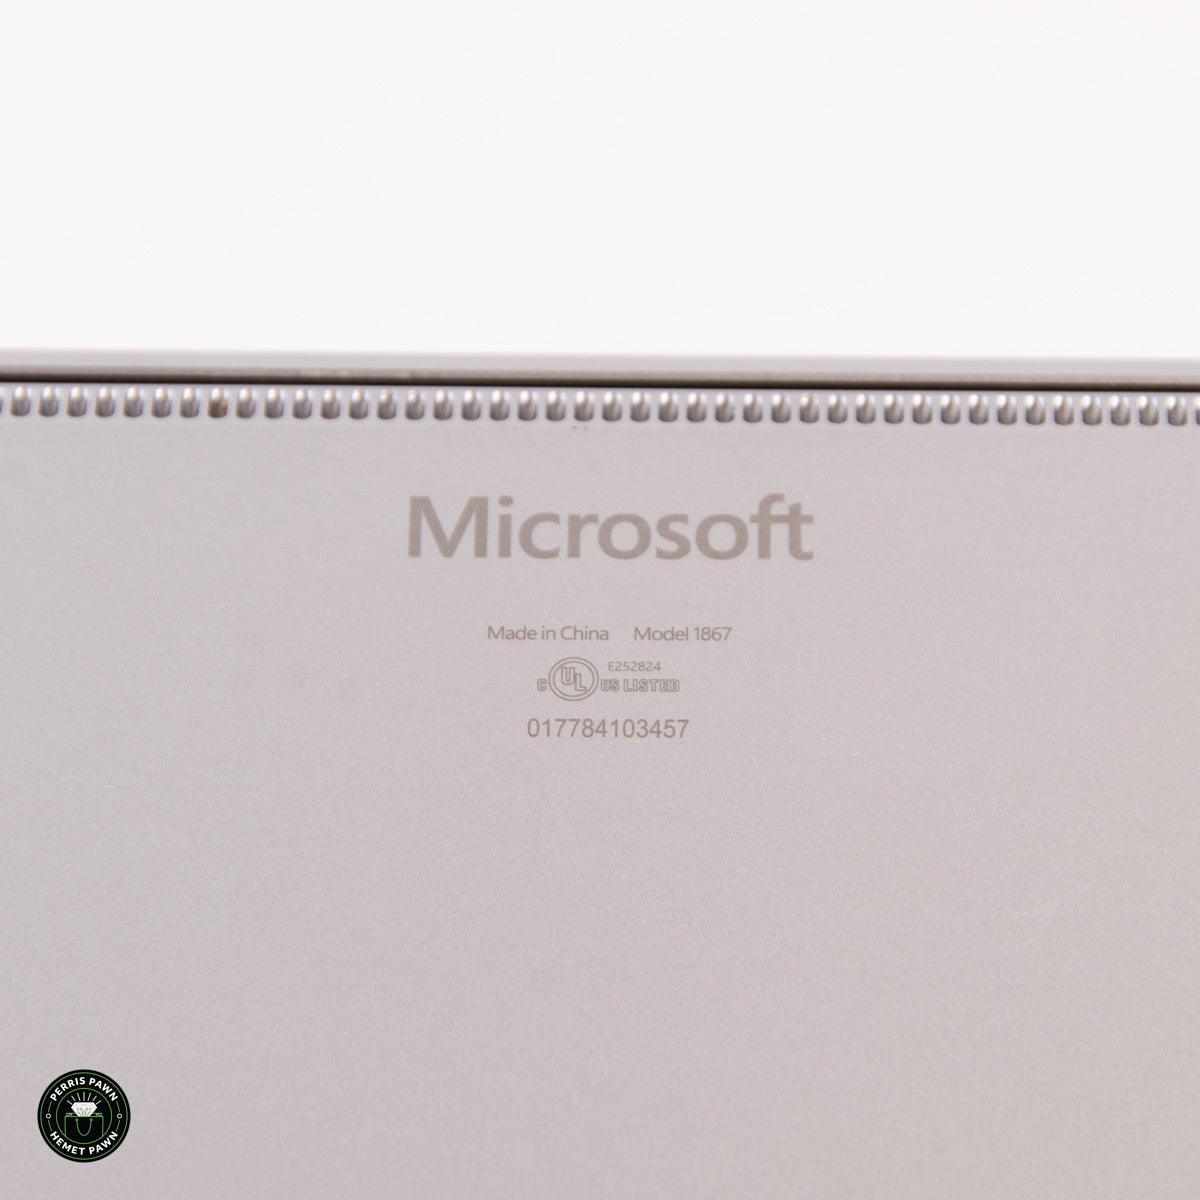 Microsoft Surface Laptop 3 - Intel i5 @ 1.2 GHz - 8 GB Ram - 128 GB SSD / 1867 - ipawnishop.com